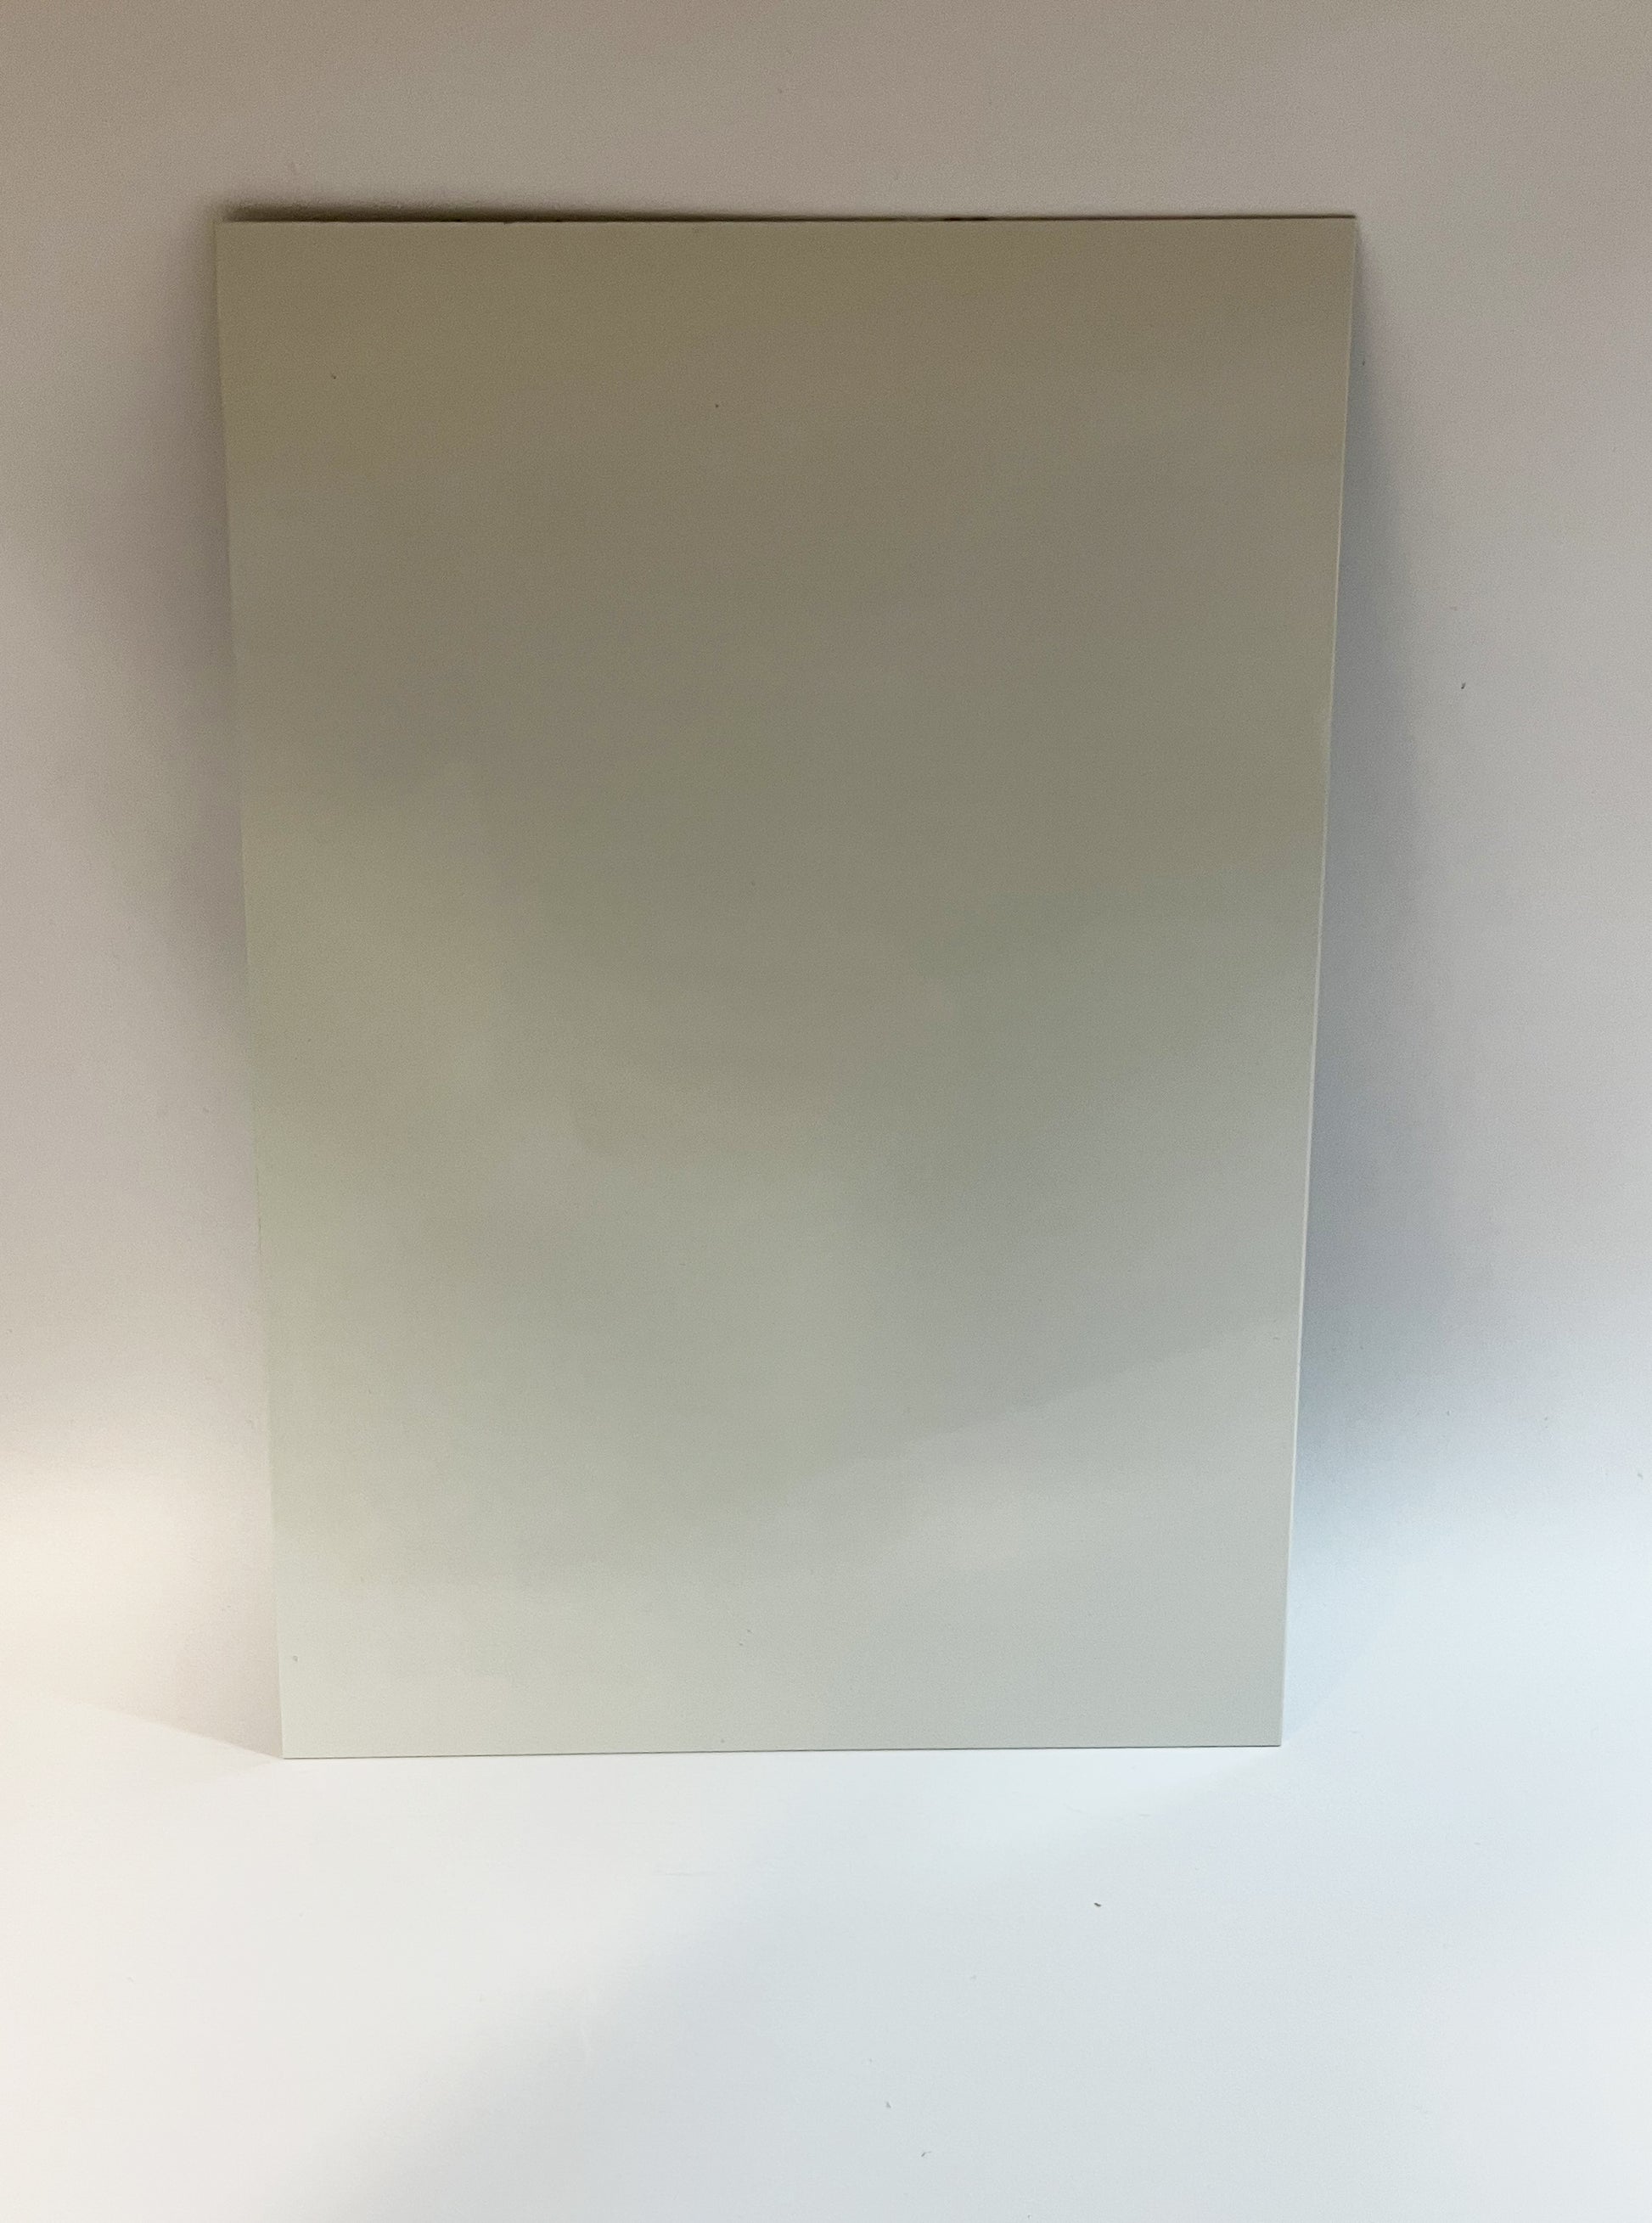 Aluminiumplatte 26 x 18 cm, Silber, Weiß, Gold - Sublishop.net GmbH